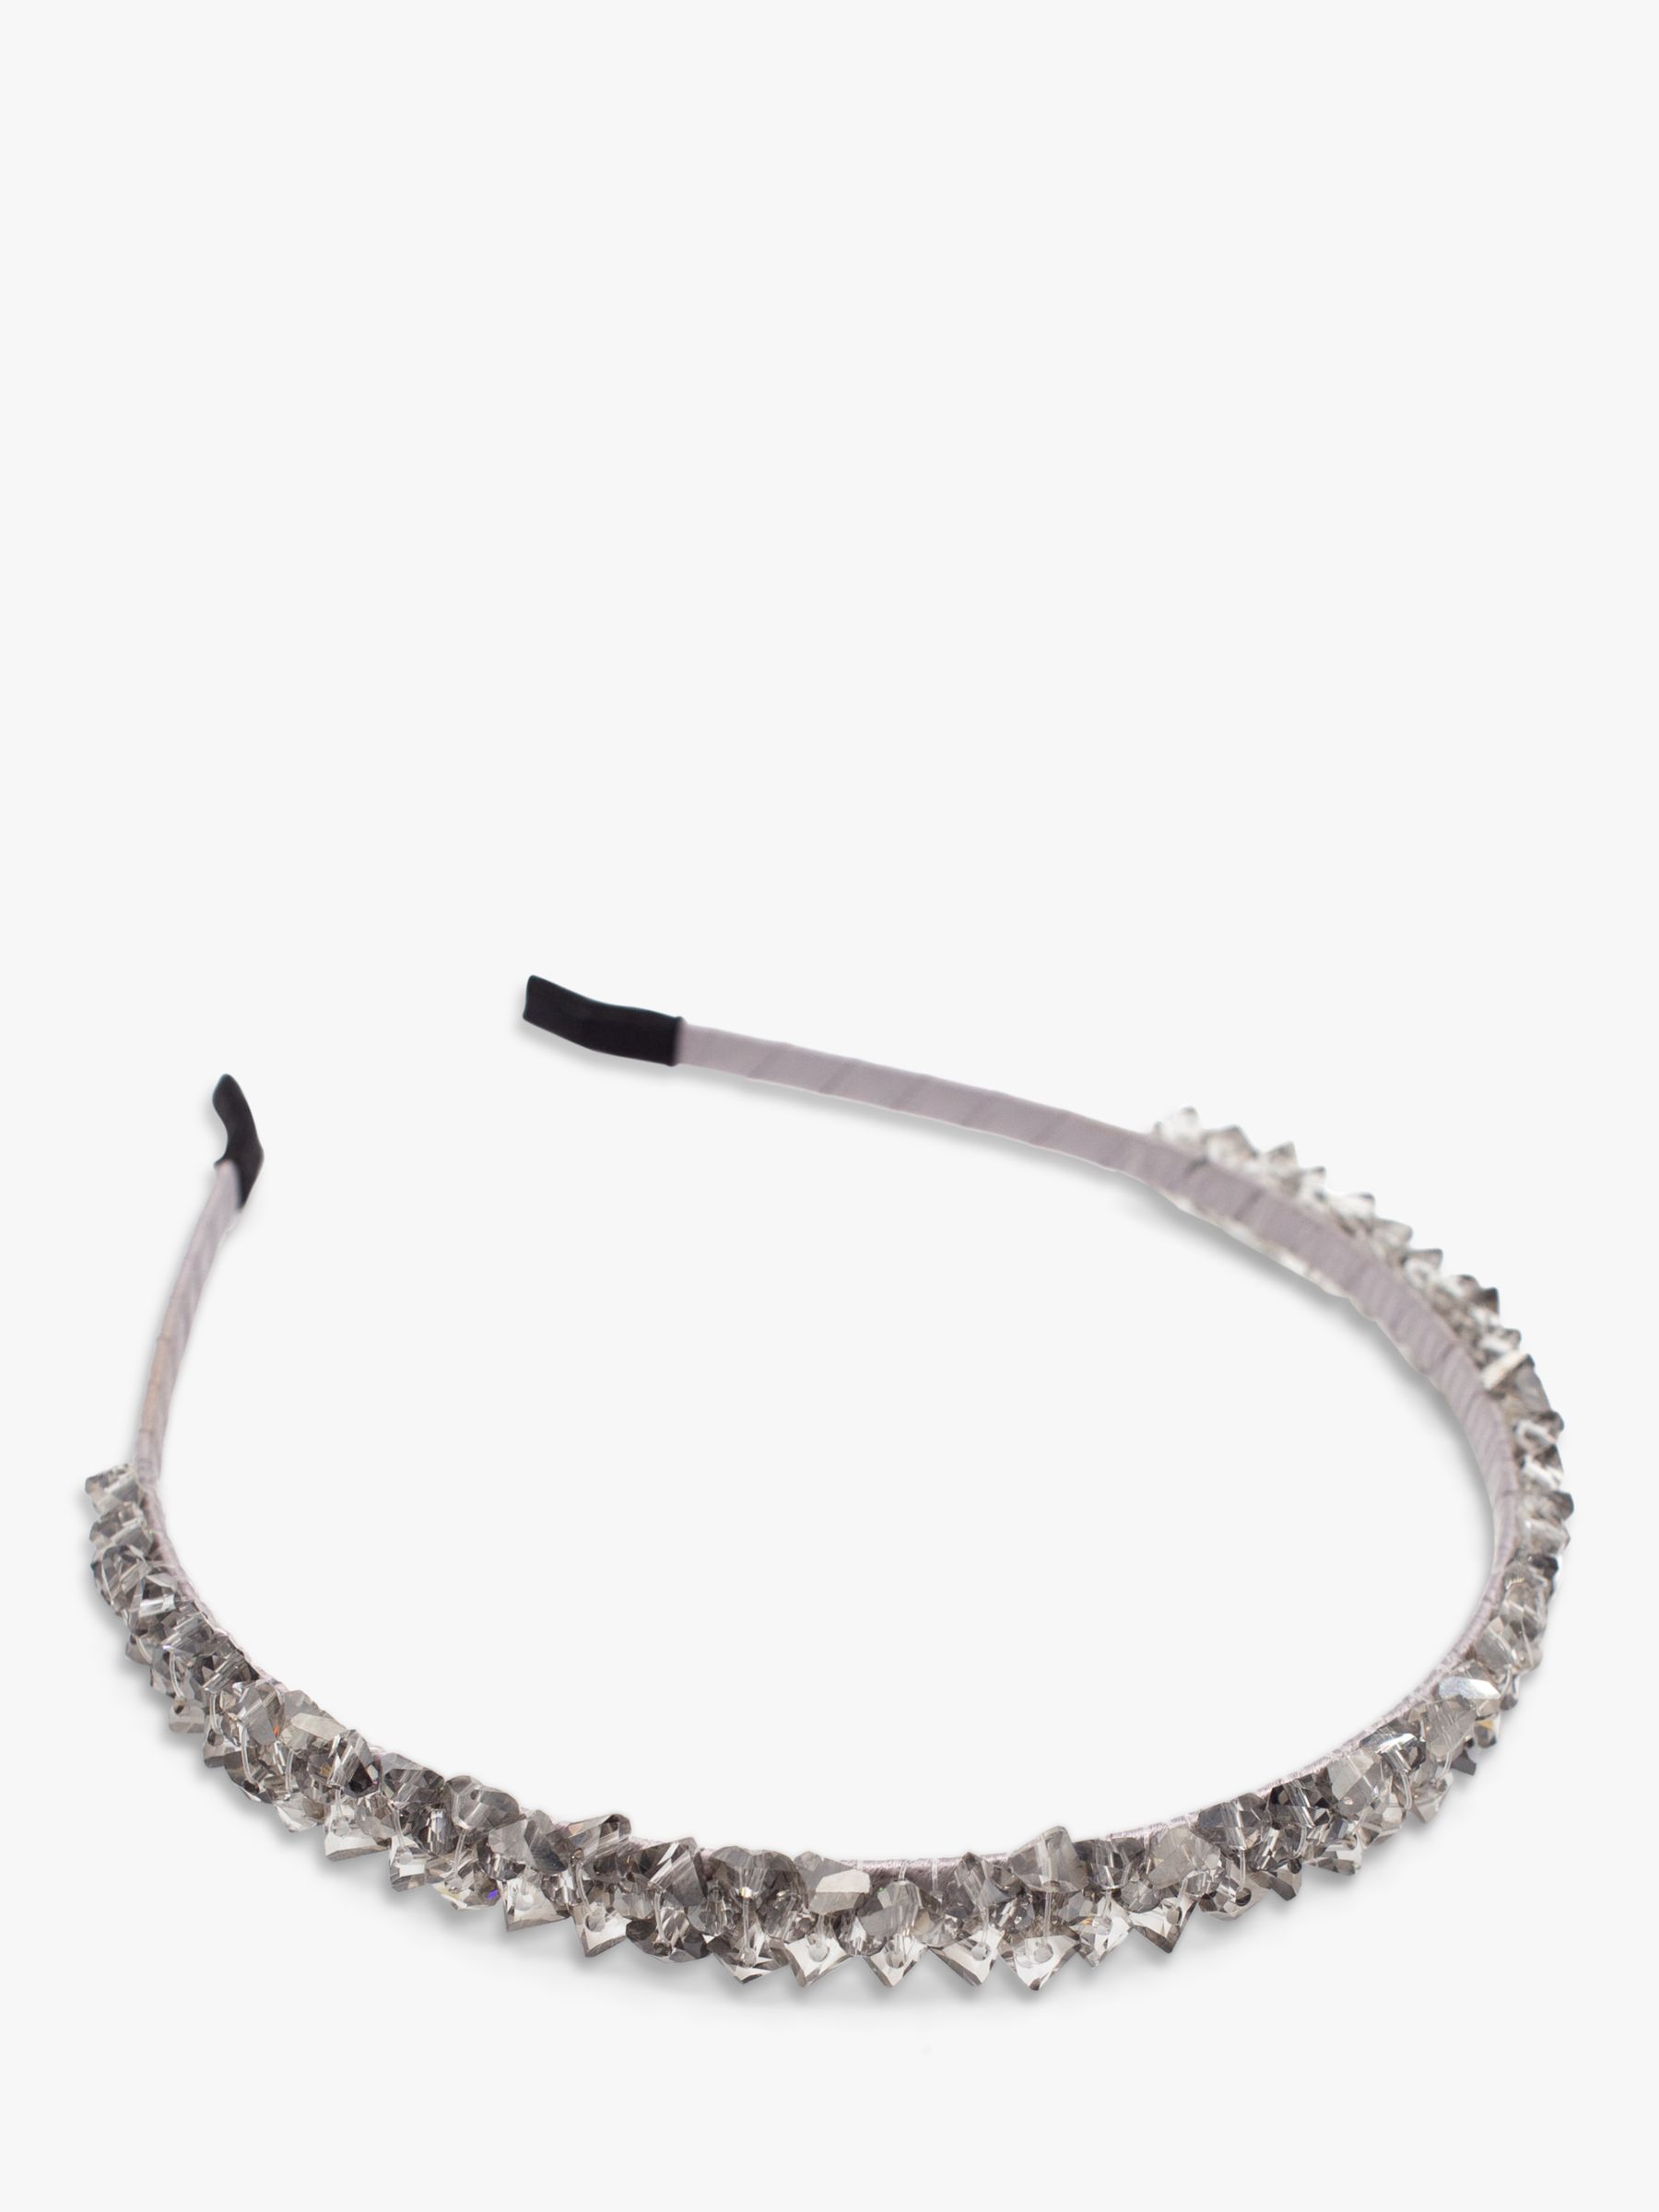 Bloom & Bay Whitsand Gem Headband, Silver, One Size